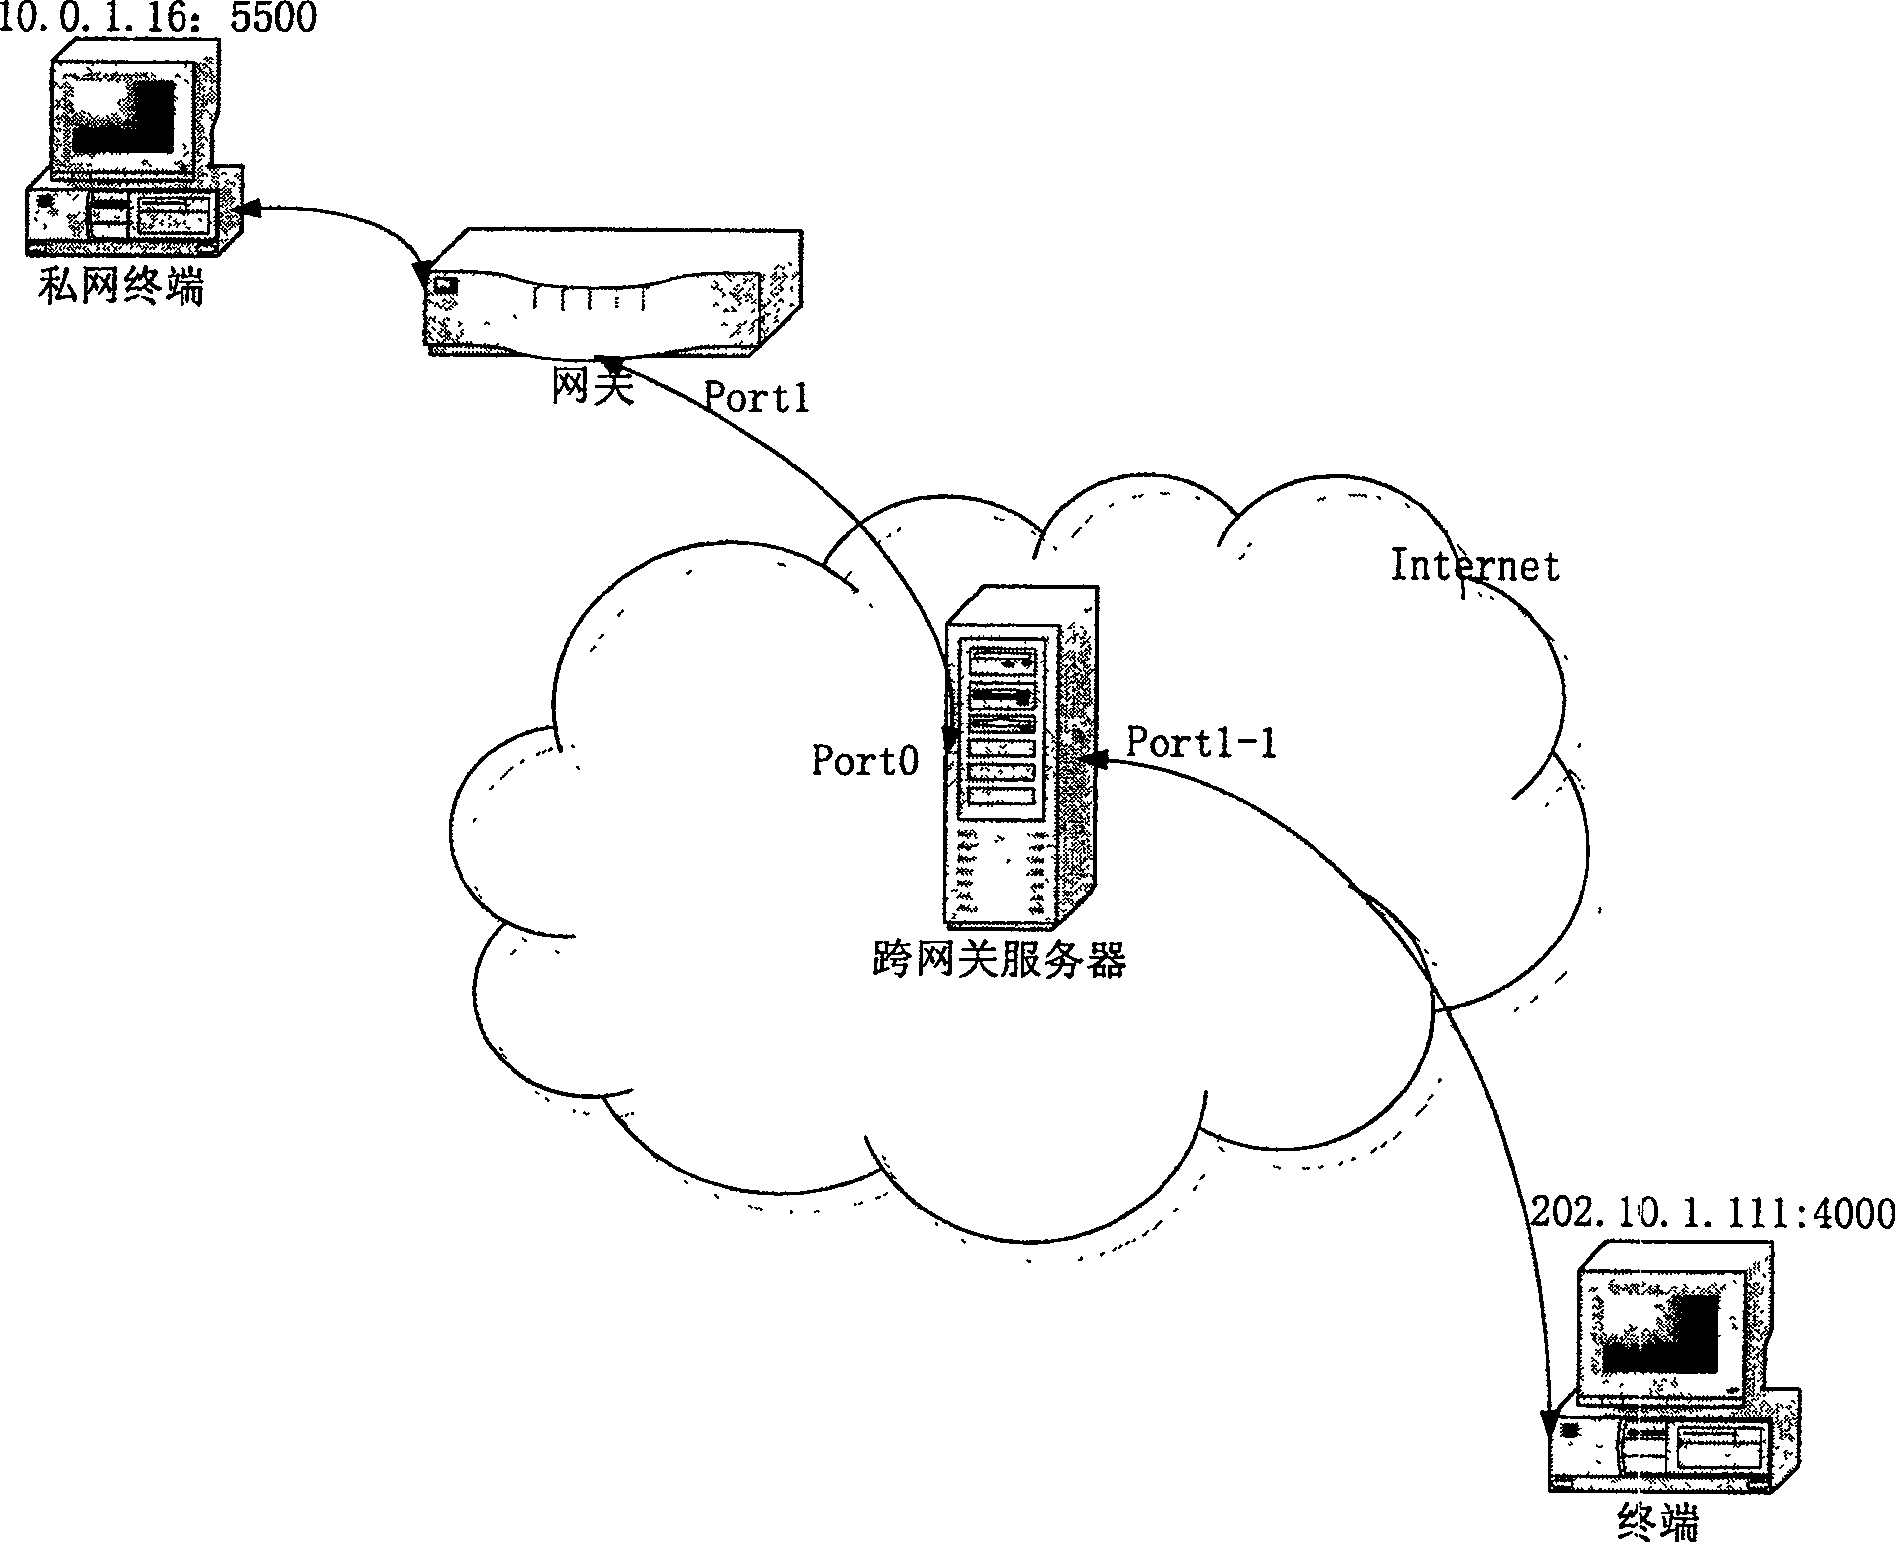 Communication method for spanning gateway